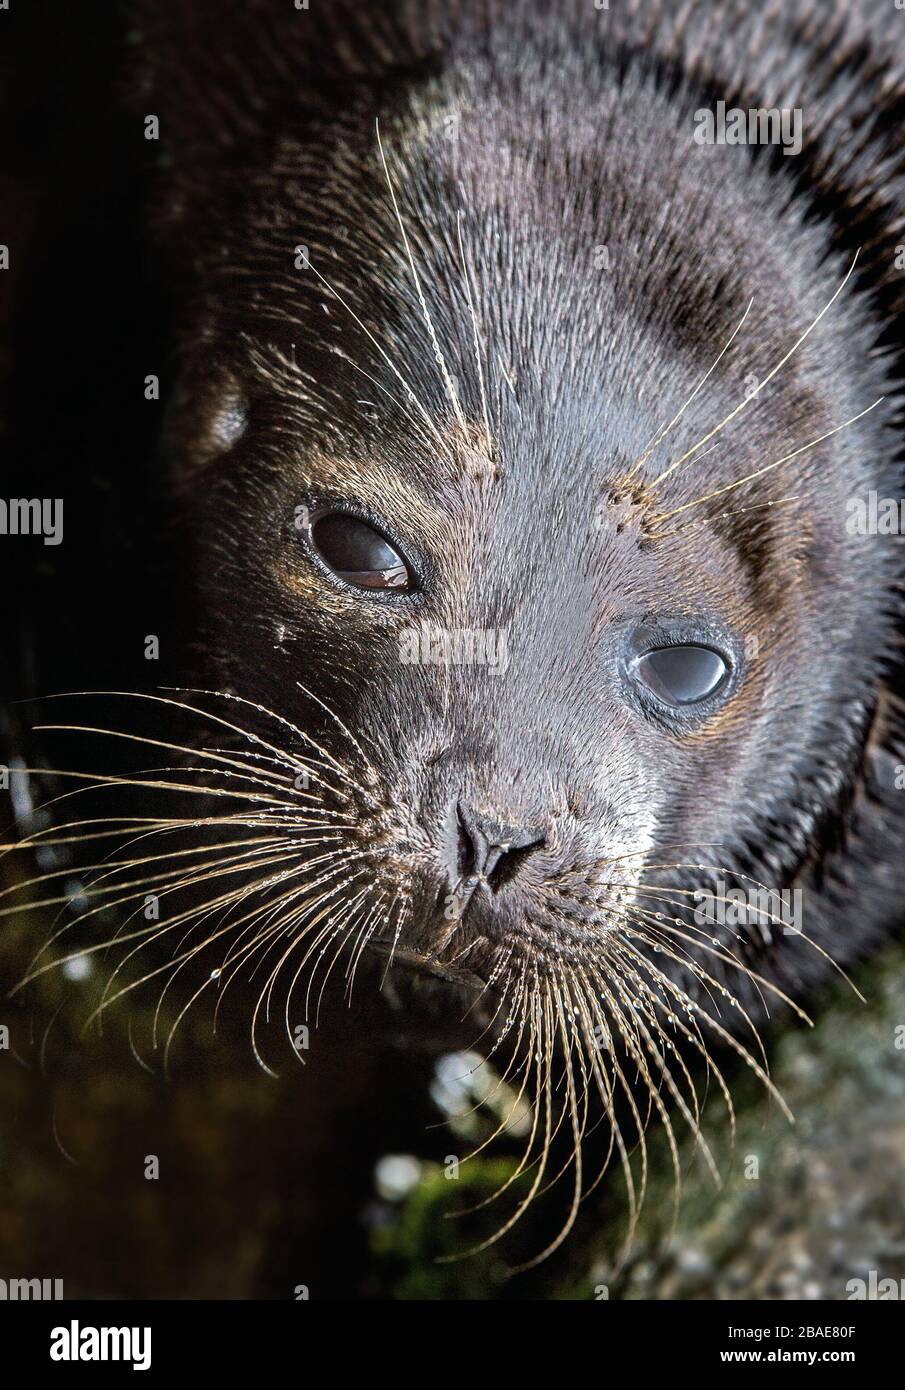 The Ladoga ringed seal.  Close up portrait. Scientific name: Pusa hispida ladogensis. The Ladoga seal in a natural habitat. Ladoga Lake. Russia Stock Photo